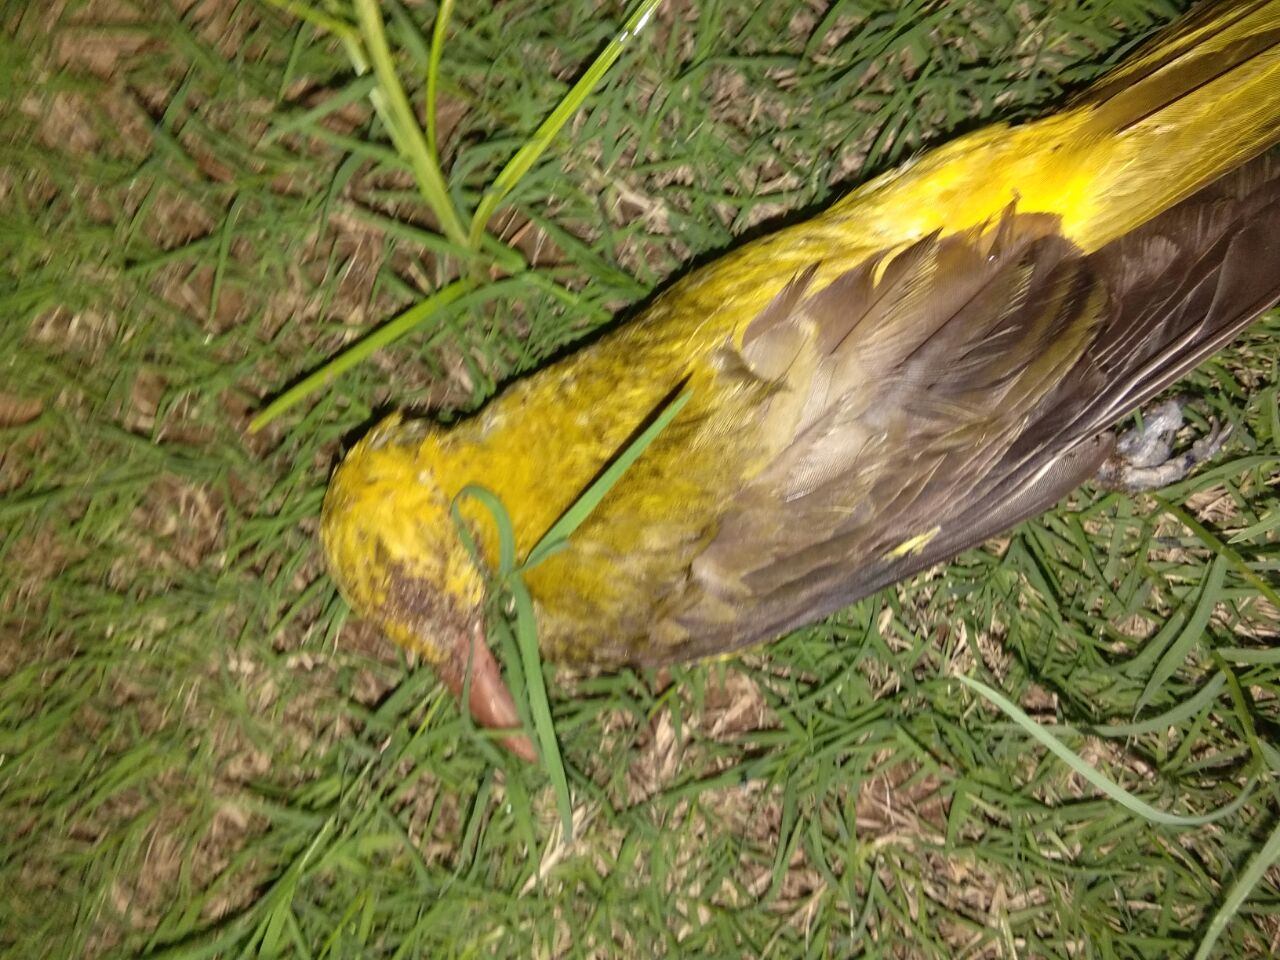 Birds carcass found by volunteers in Vadodara